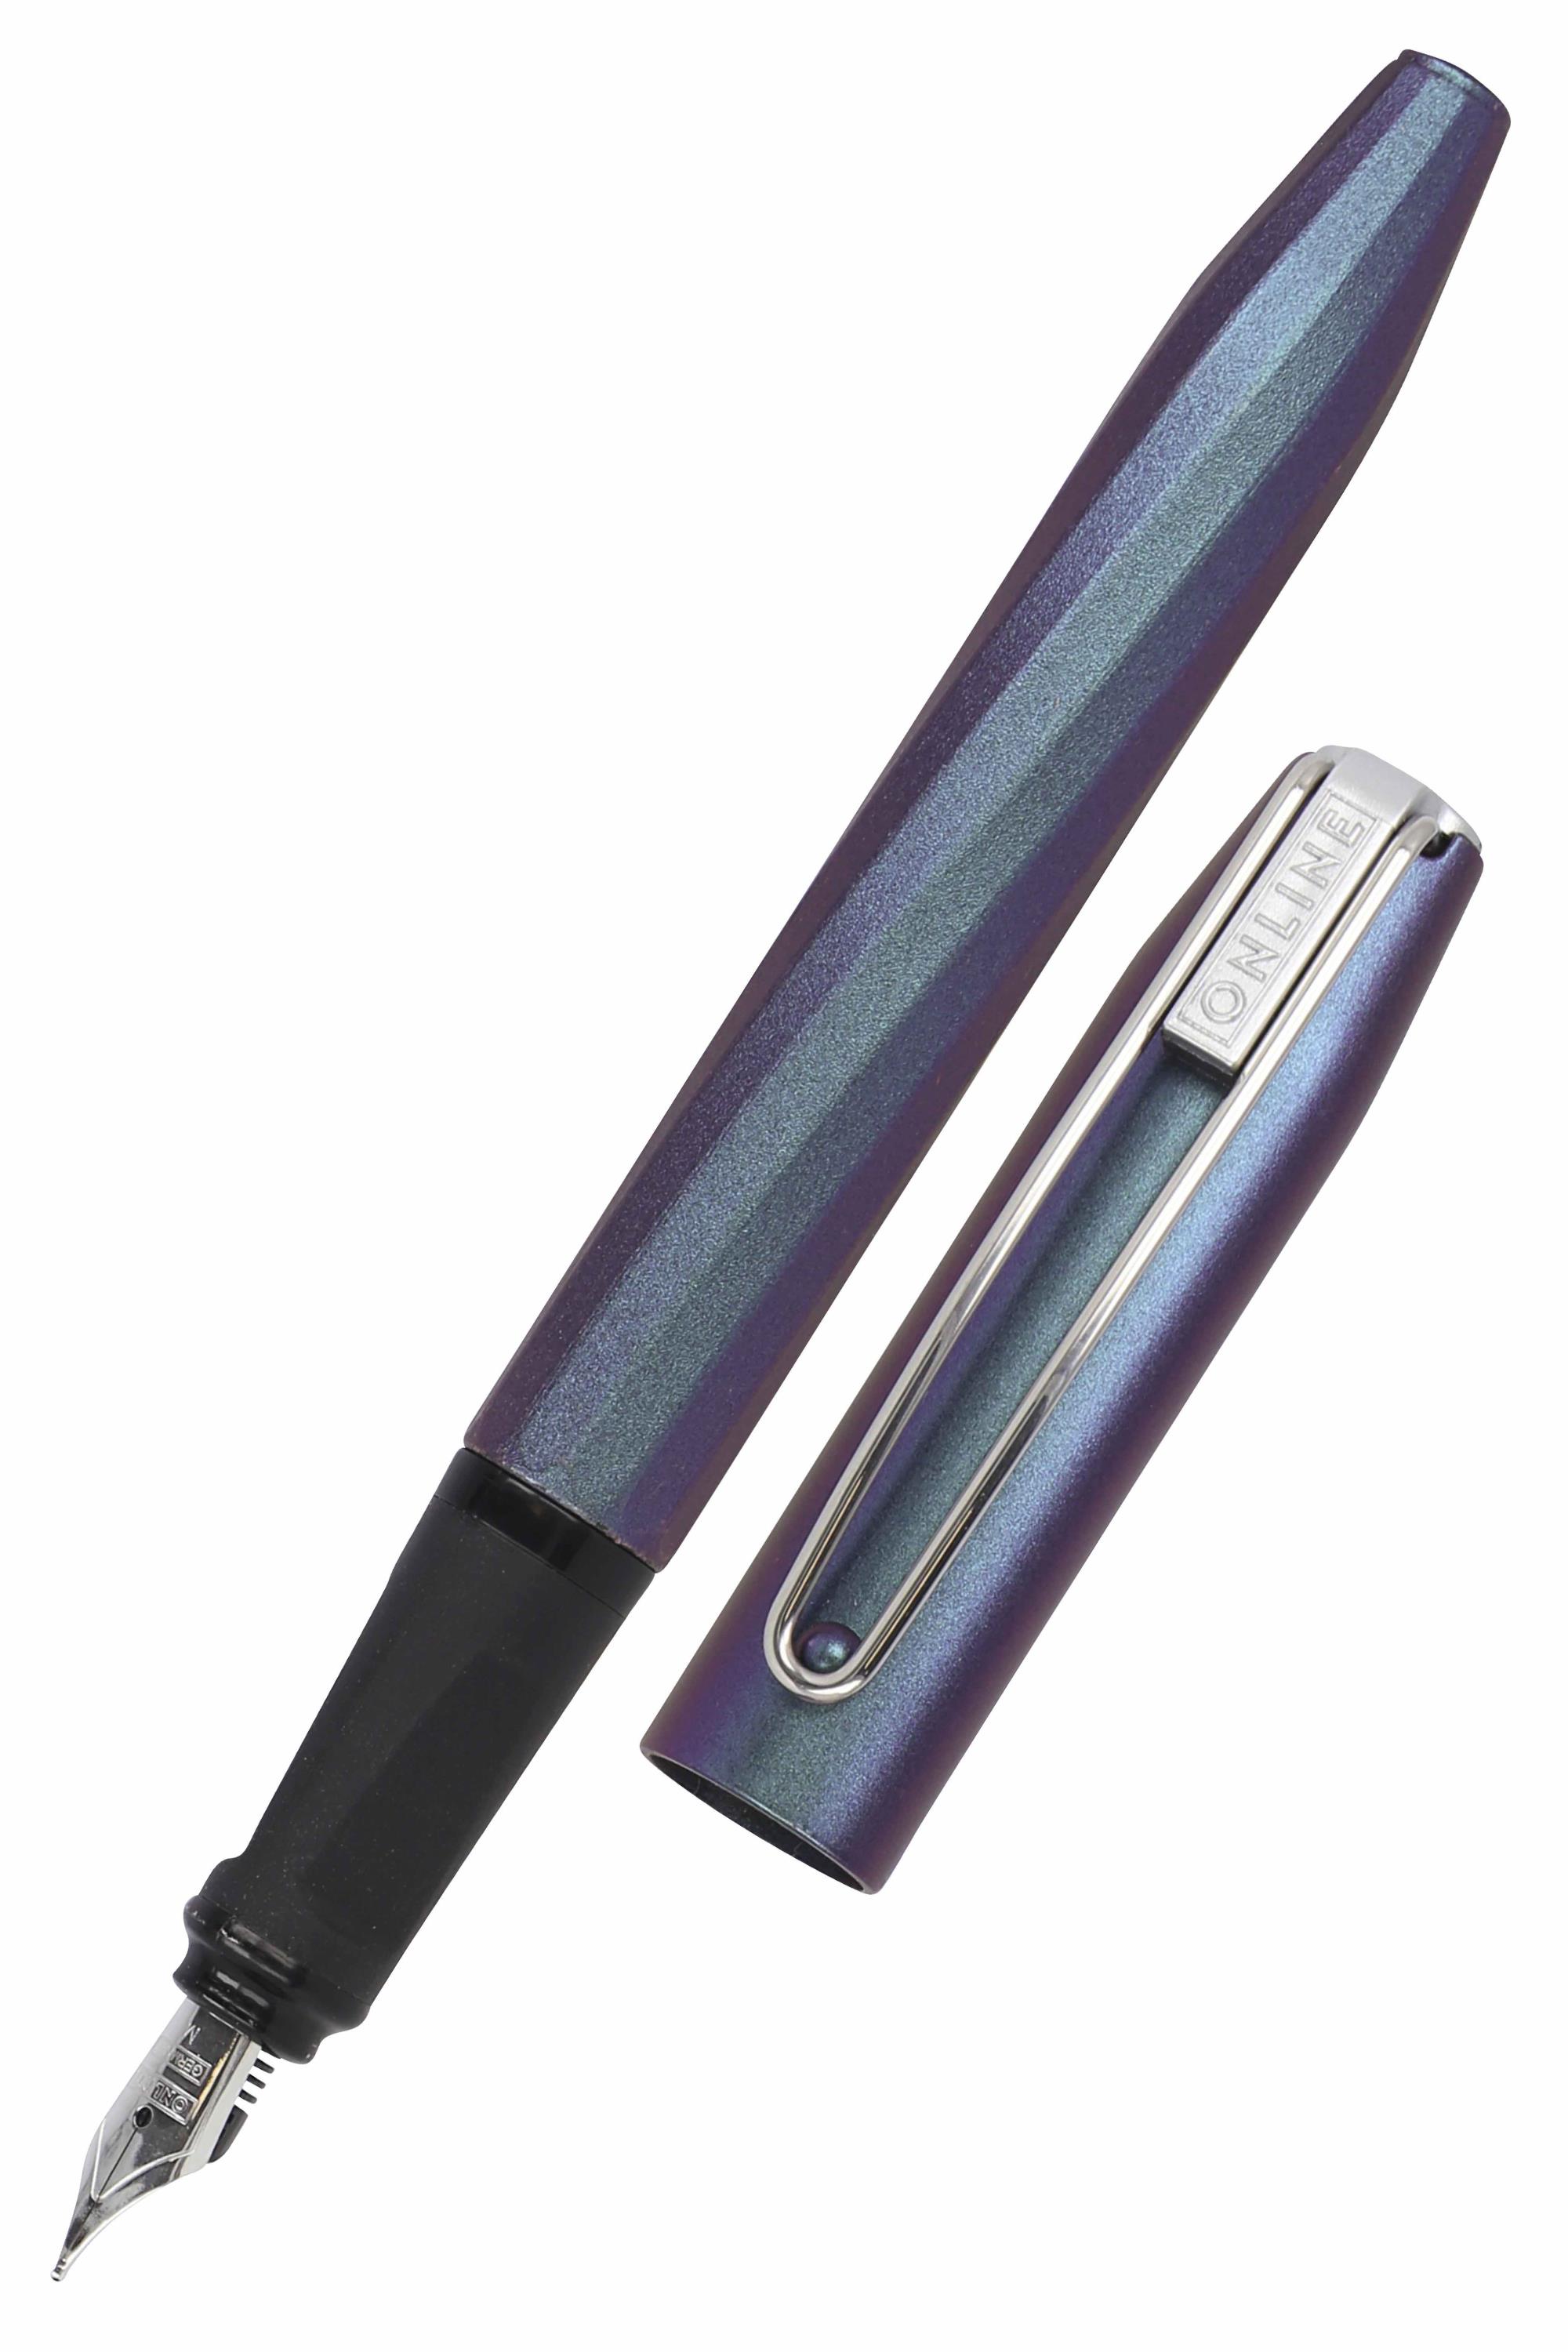 Füller Slope metallic lilac